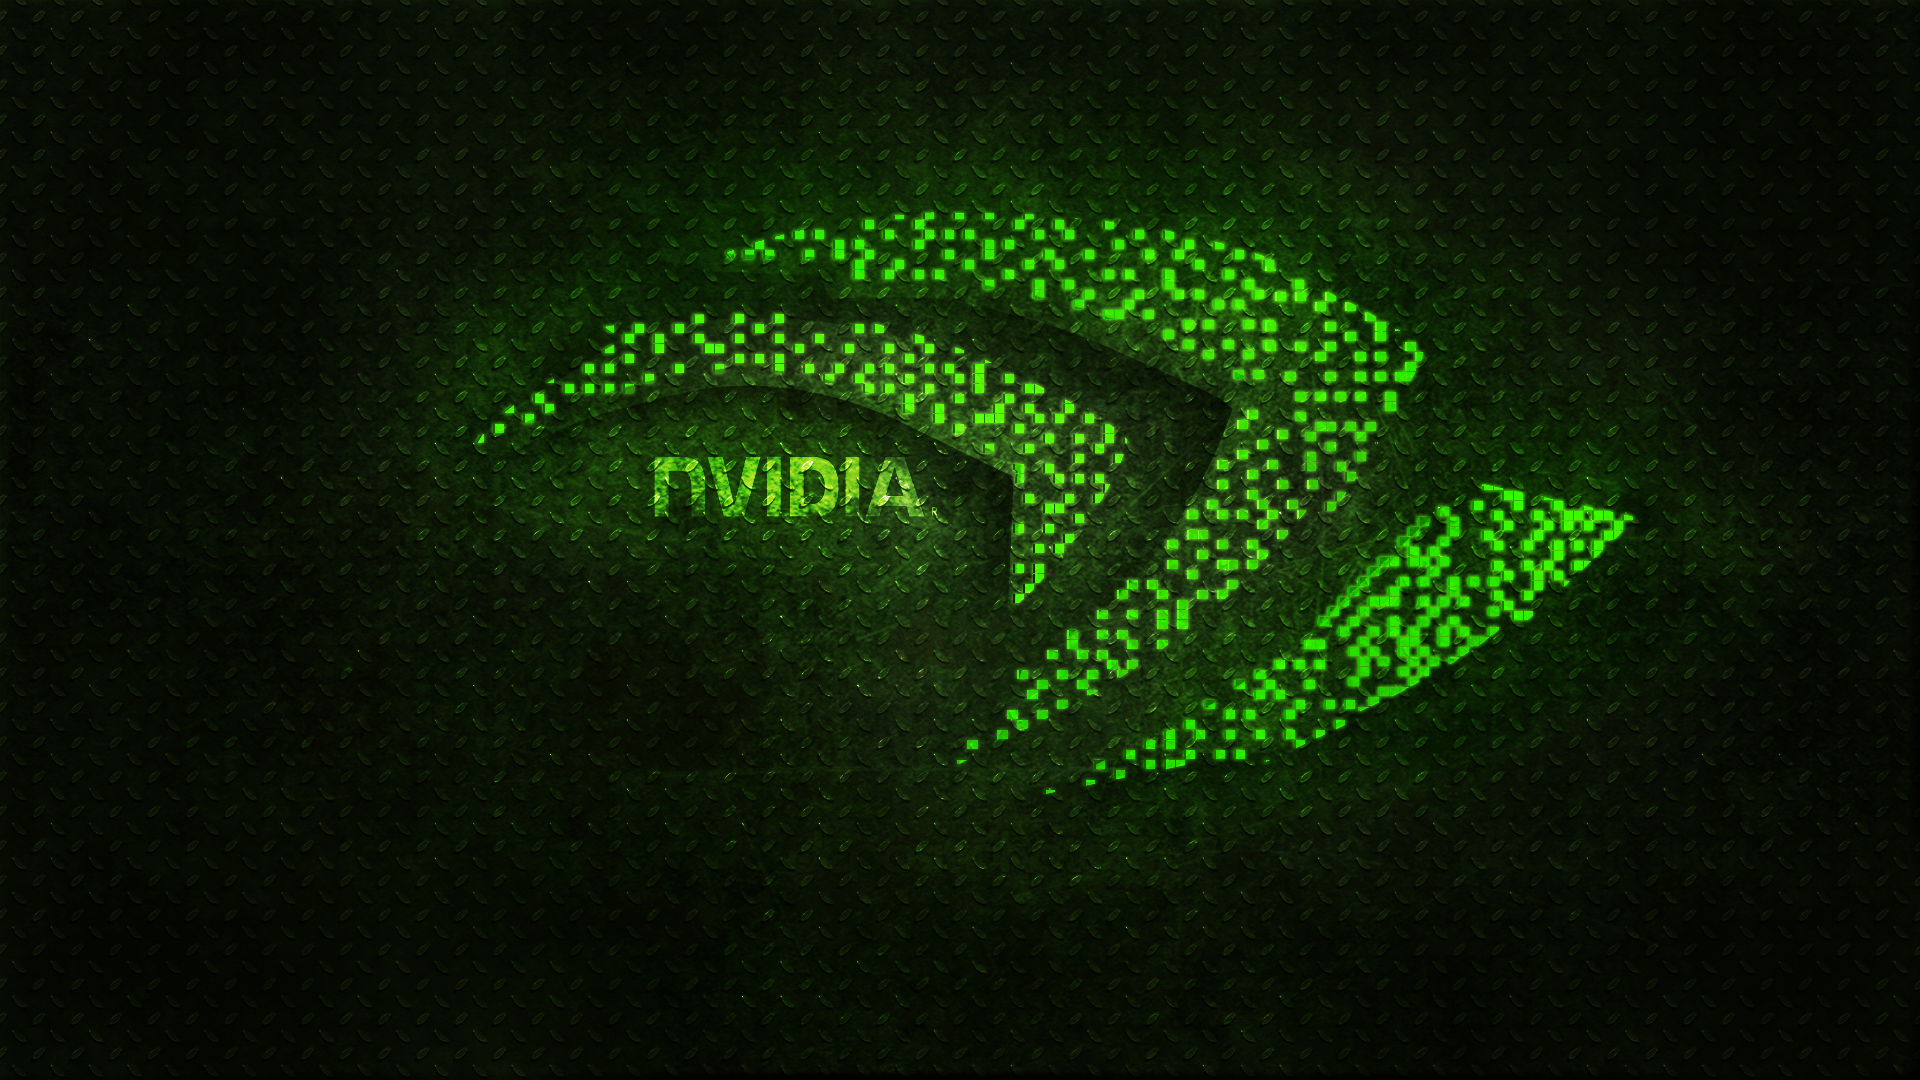 X nvidia desktop wallpapers group nvidia logo design inspiration graphics desktop wallpaper